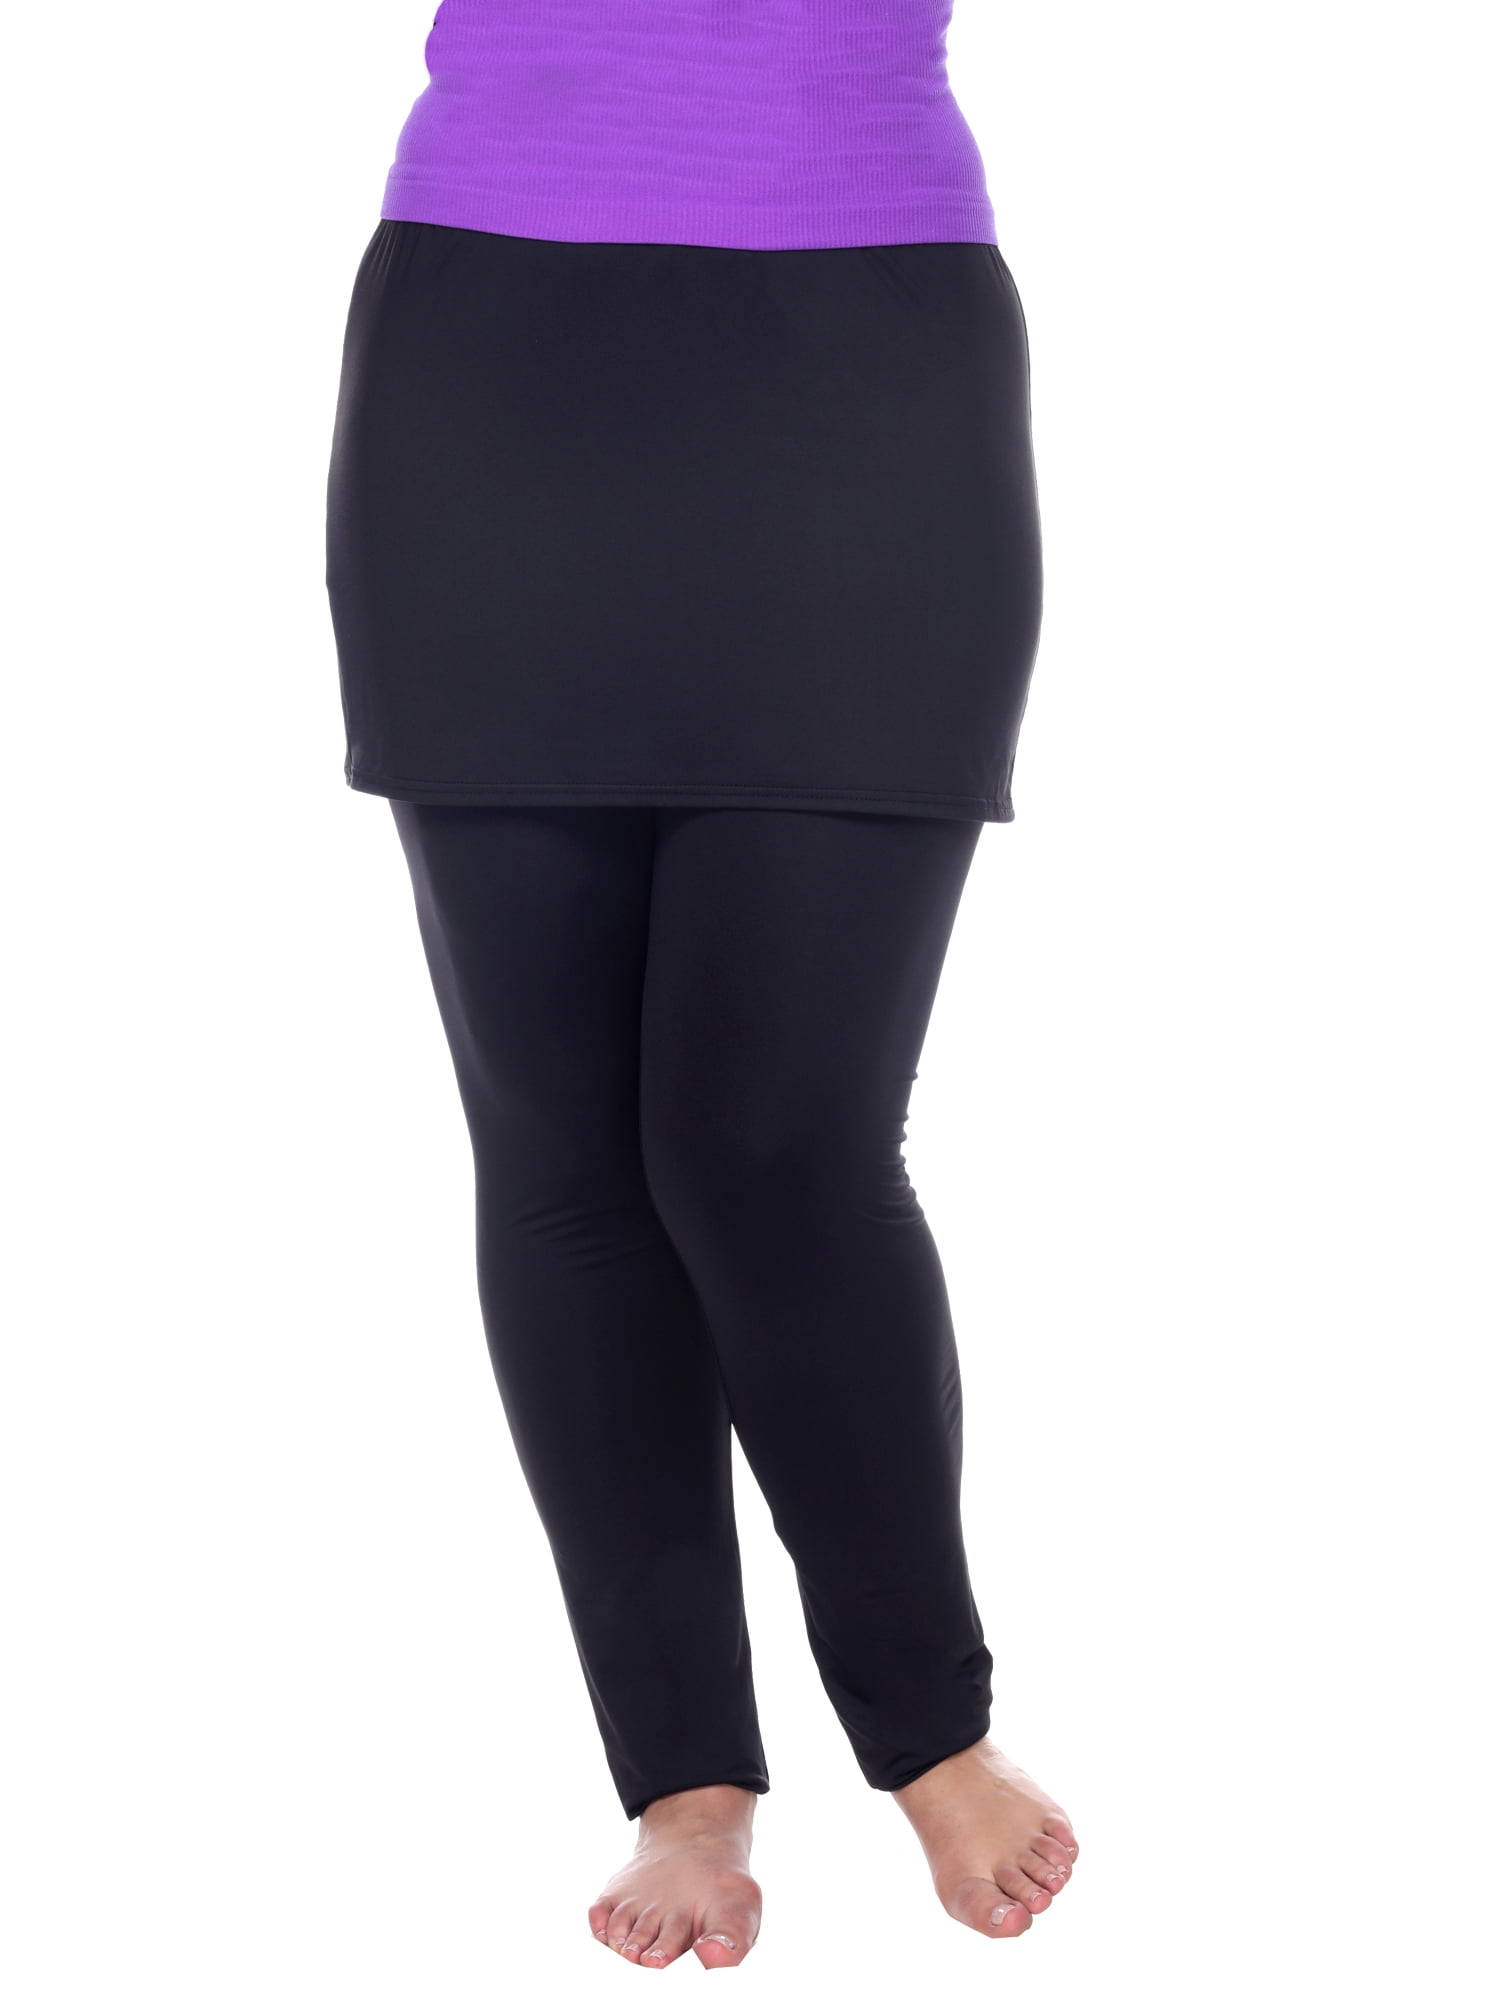 Memoi leggings skeggings skirt with leggings black purple m/l s/m 